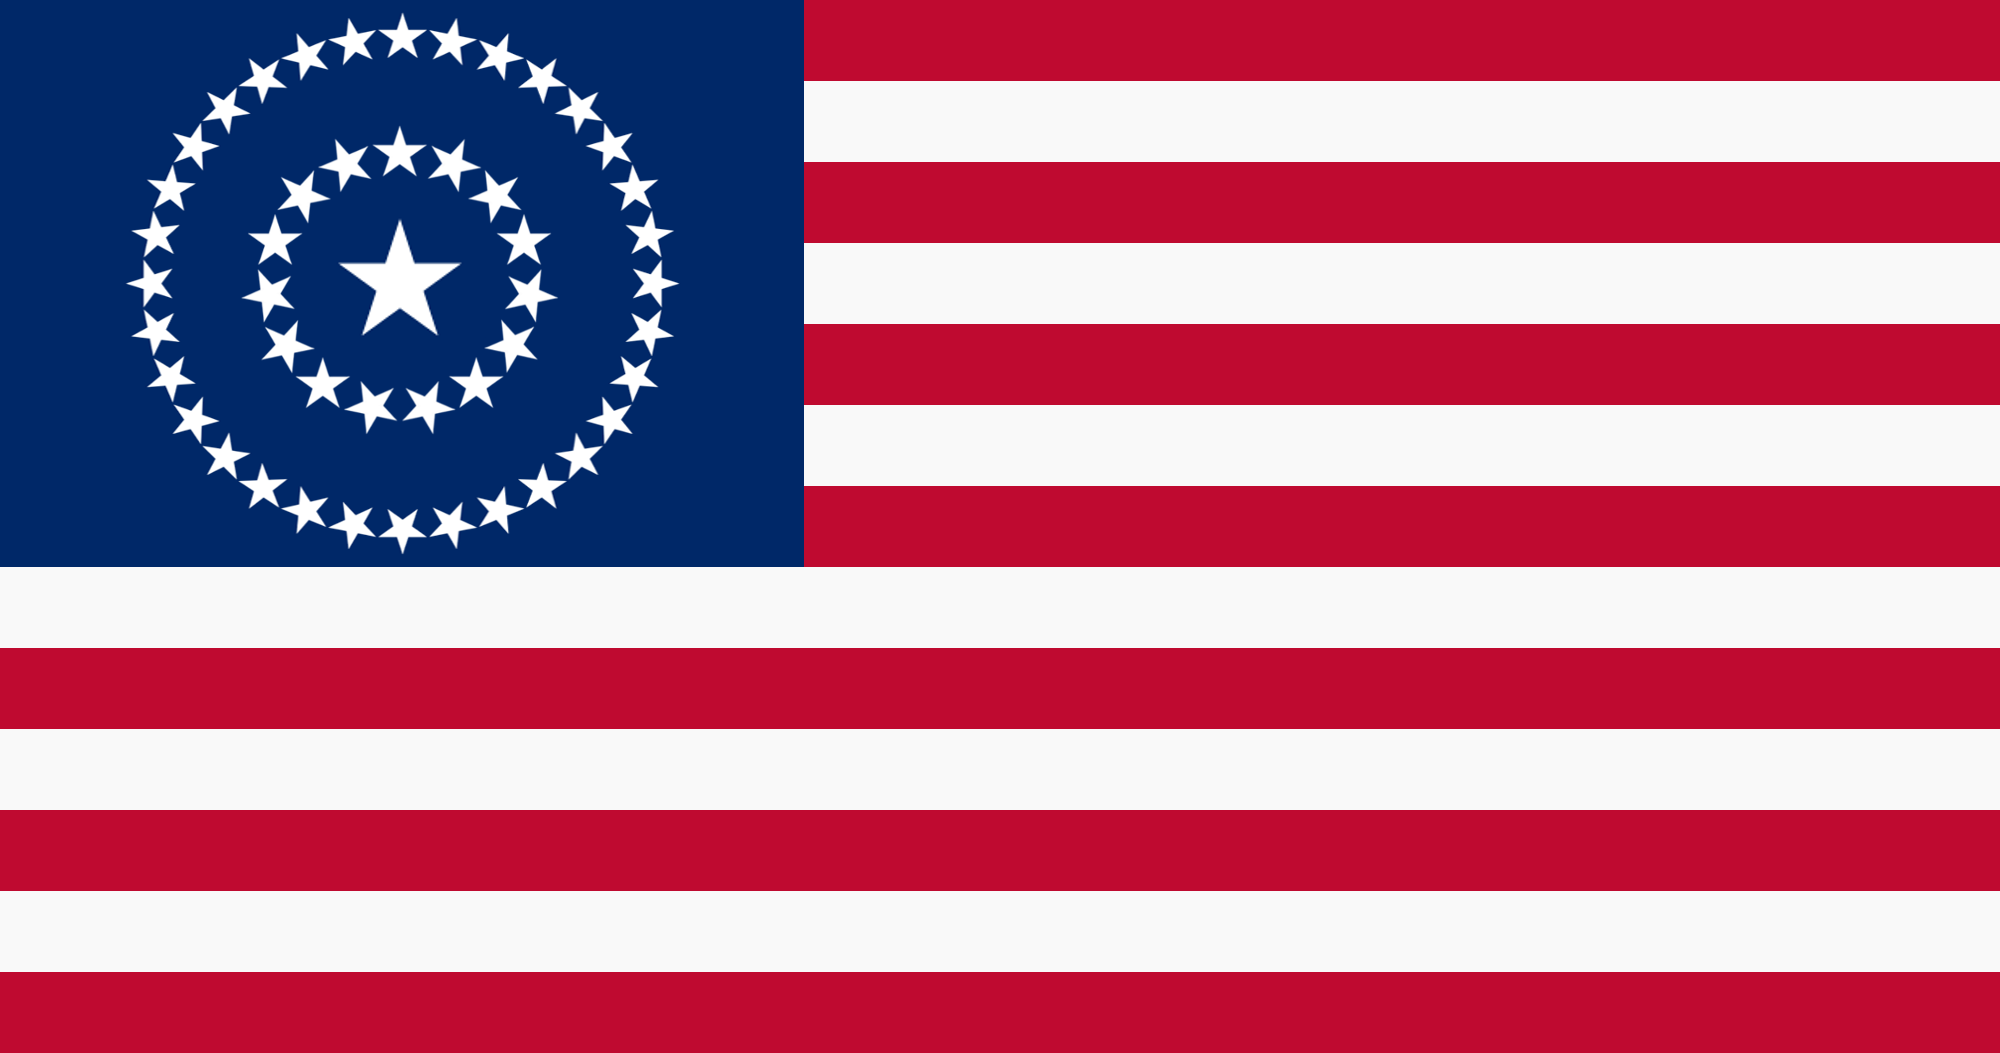 Alternate Flag of United States (48 Stars) v.1